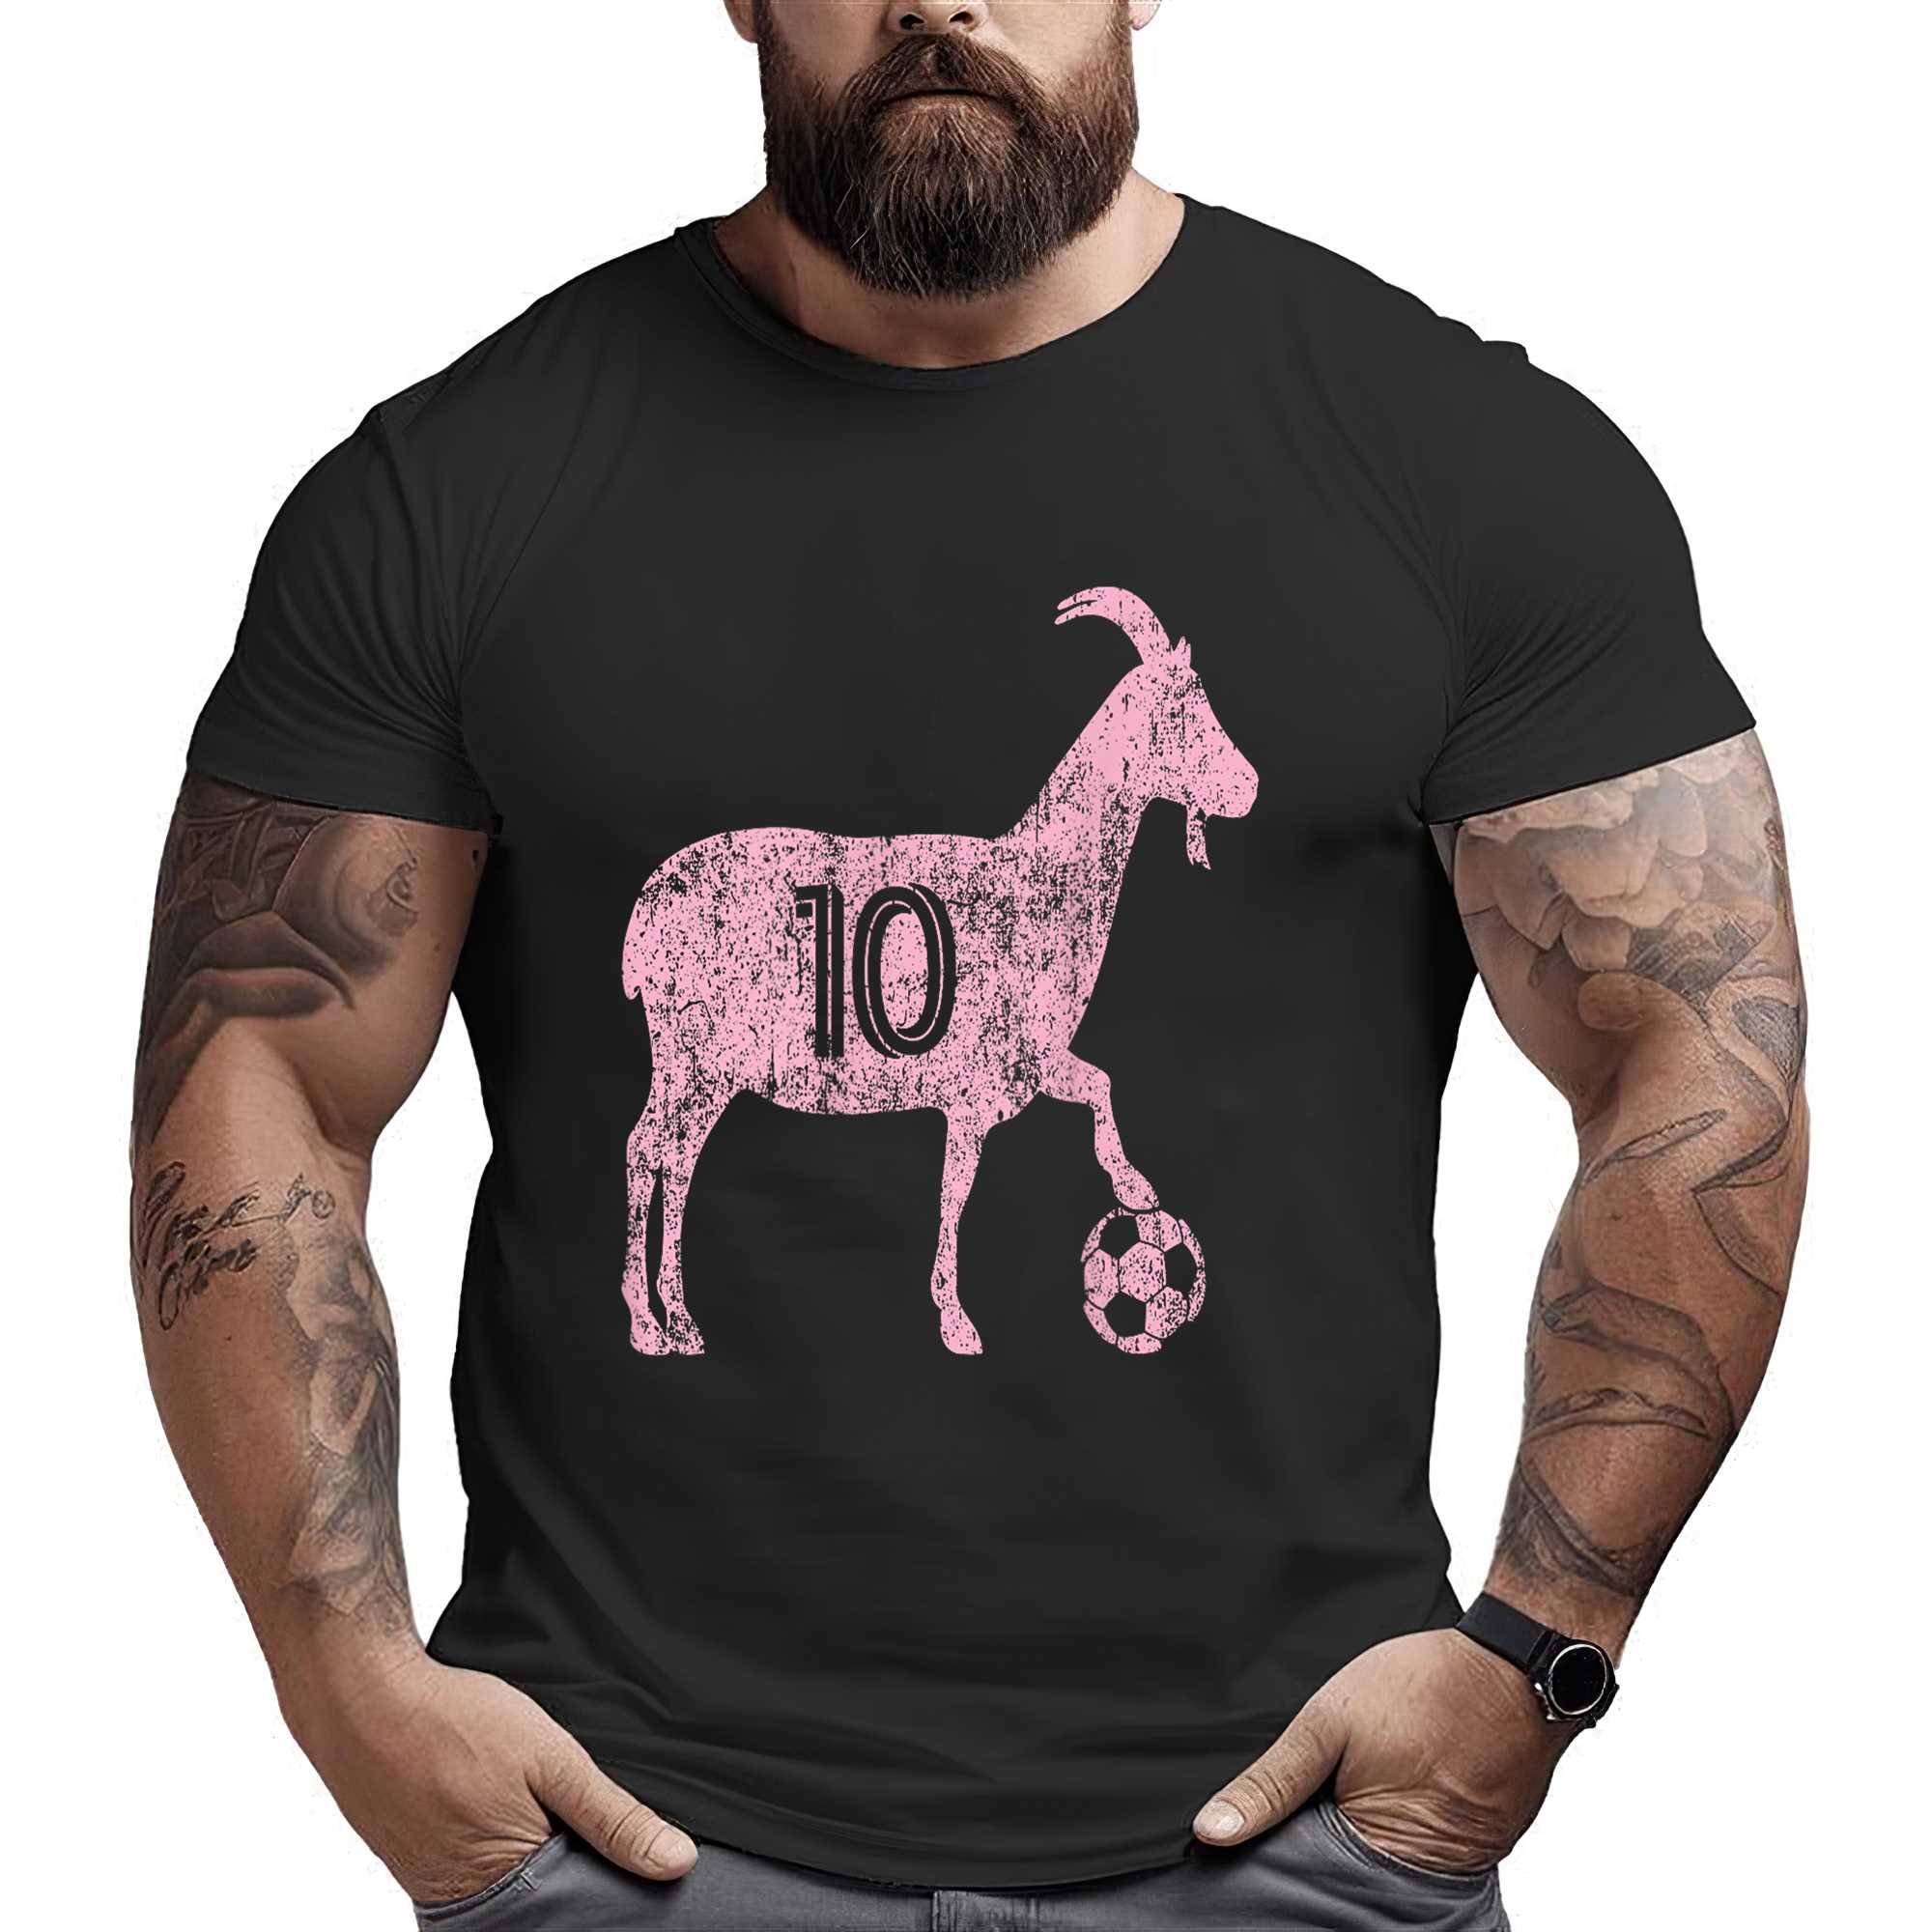 Goat 10 Shirt Hoodie For Men Women Kids Funny Soccer T-shirt